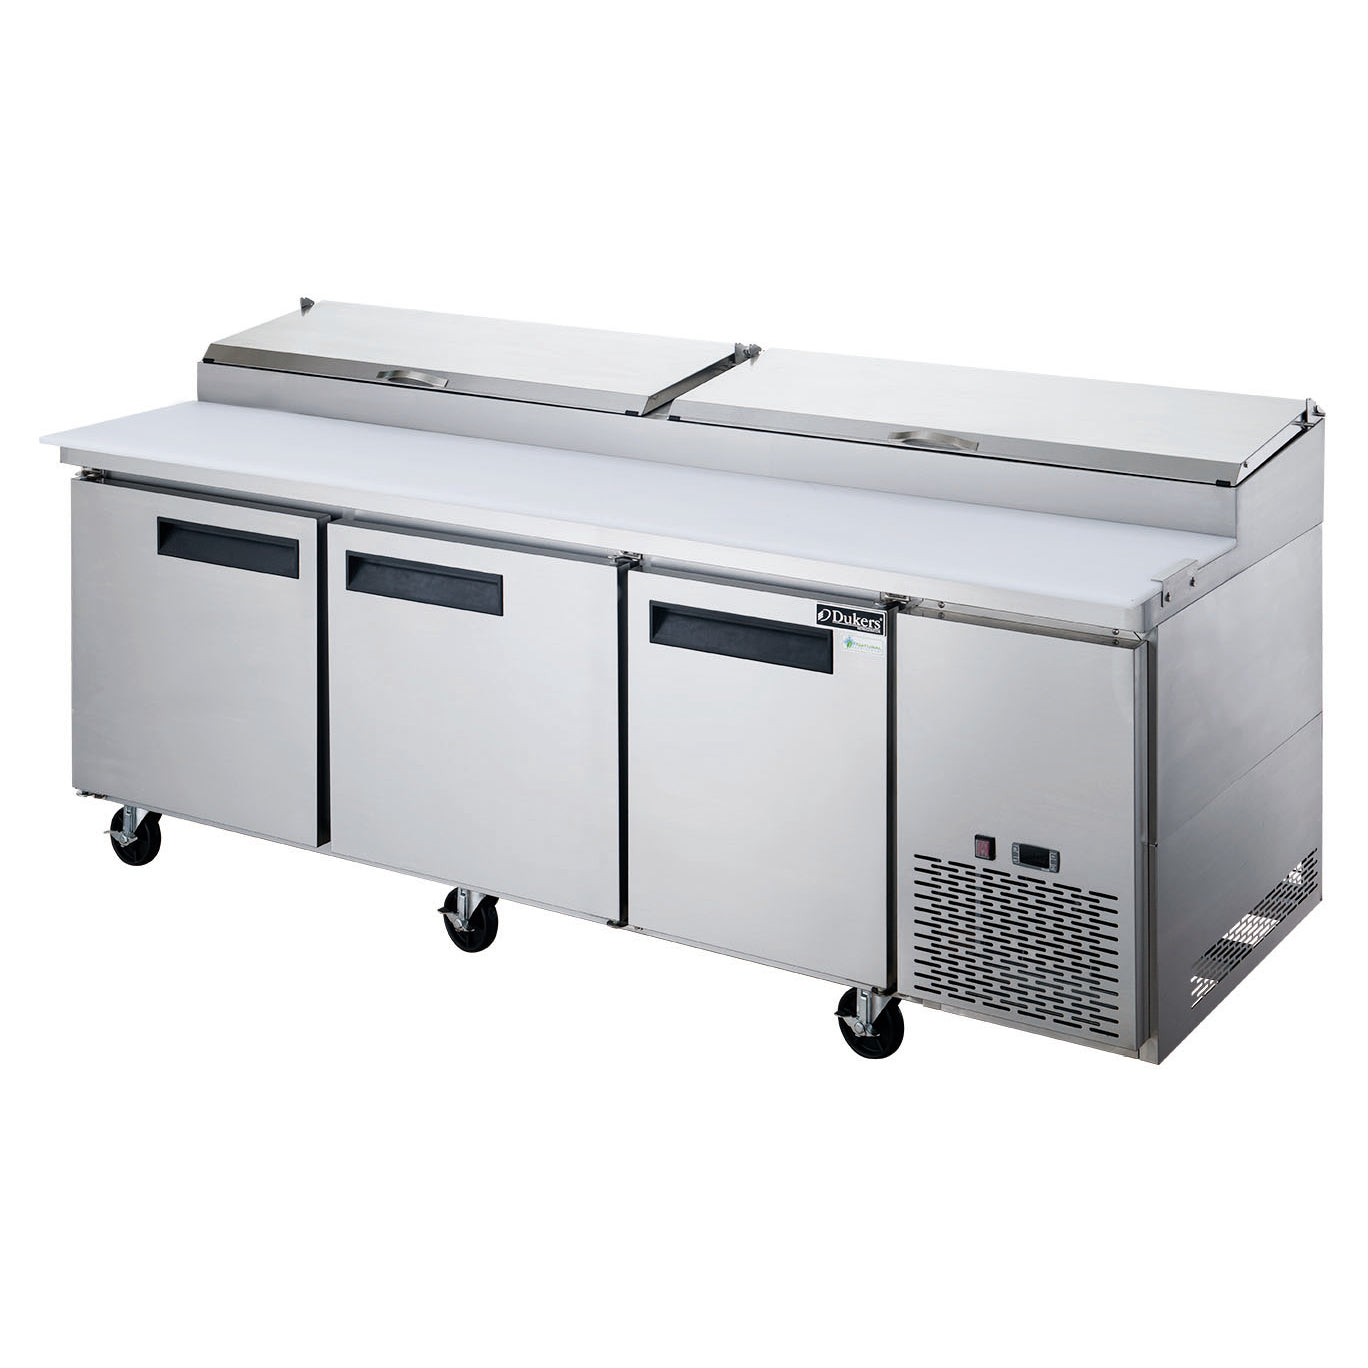 Dukers DPP90-12-S3 Commercial 3-Door Pizza Prep Table Refrigerator